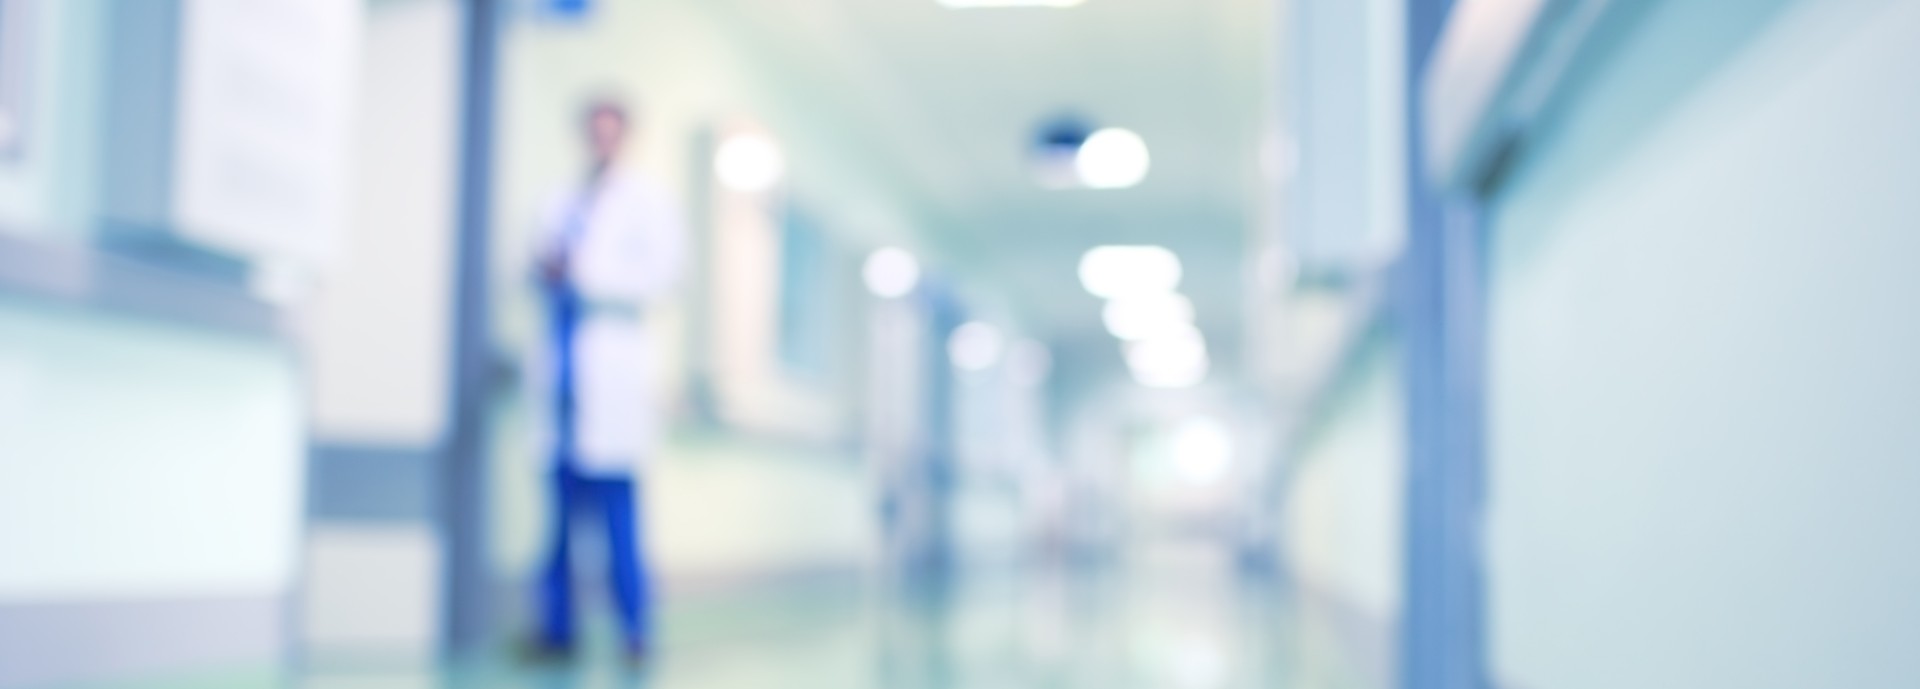 Blurred image of a hospital corridor